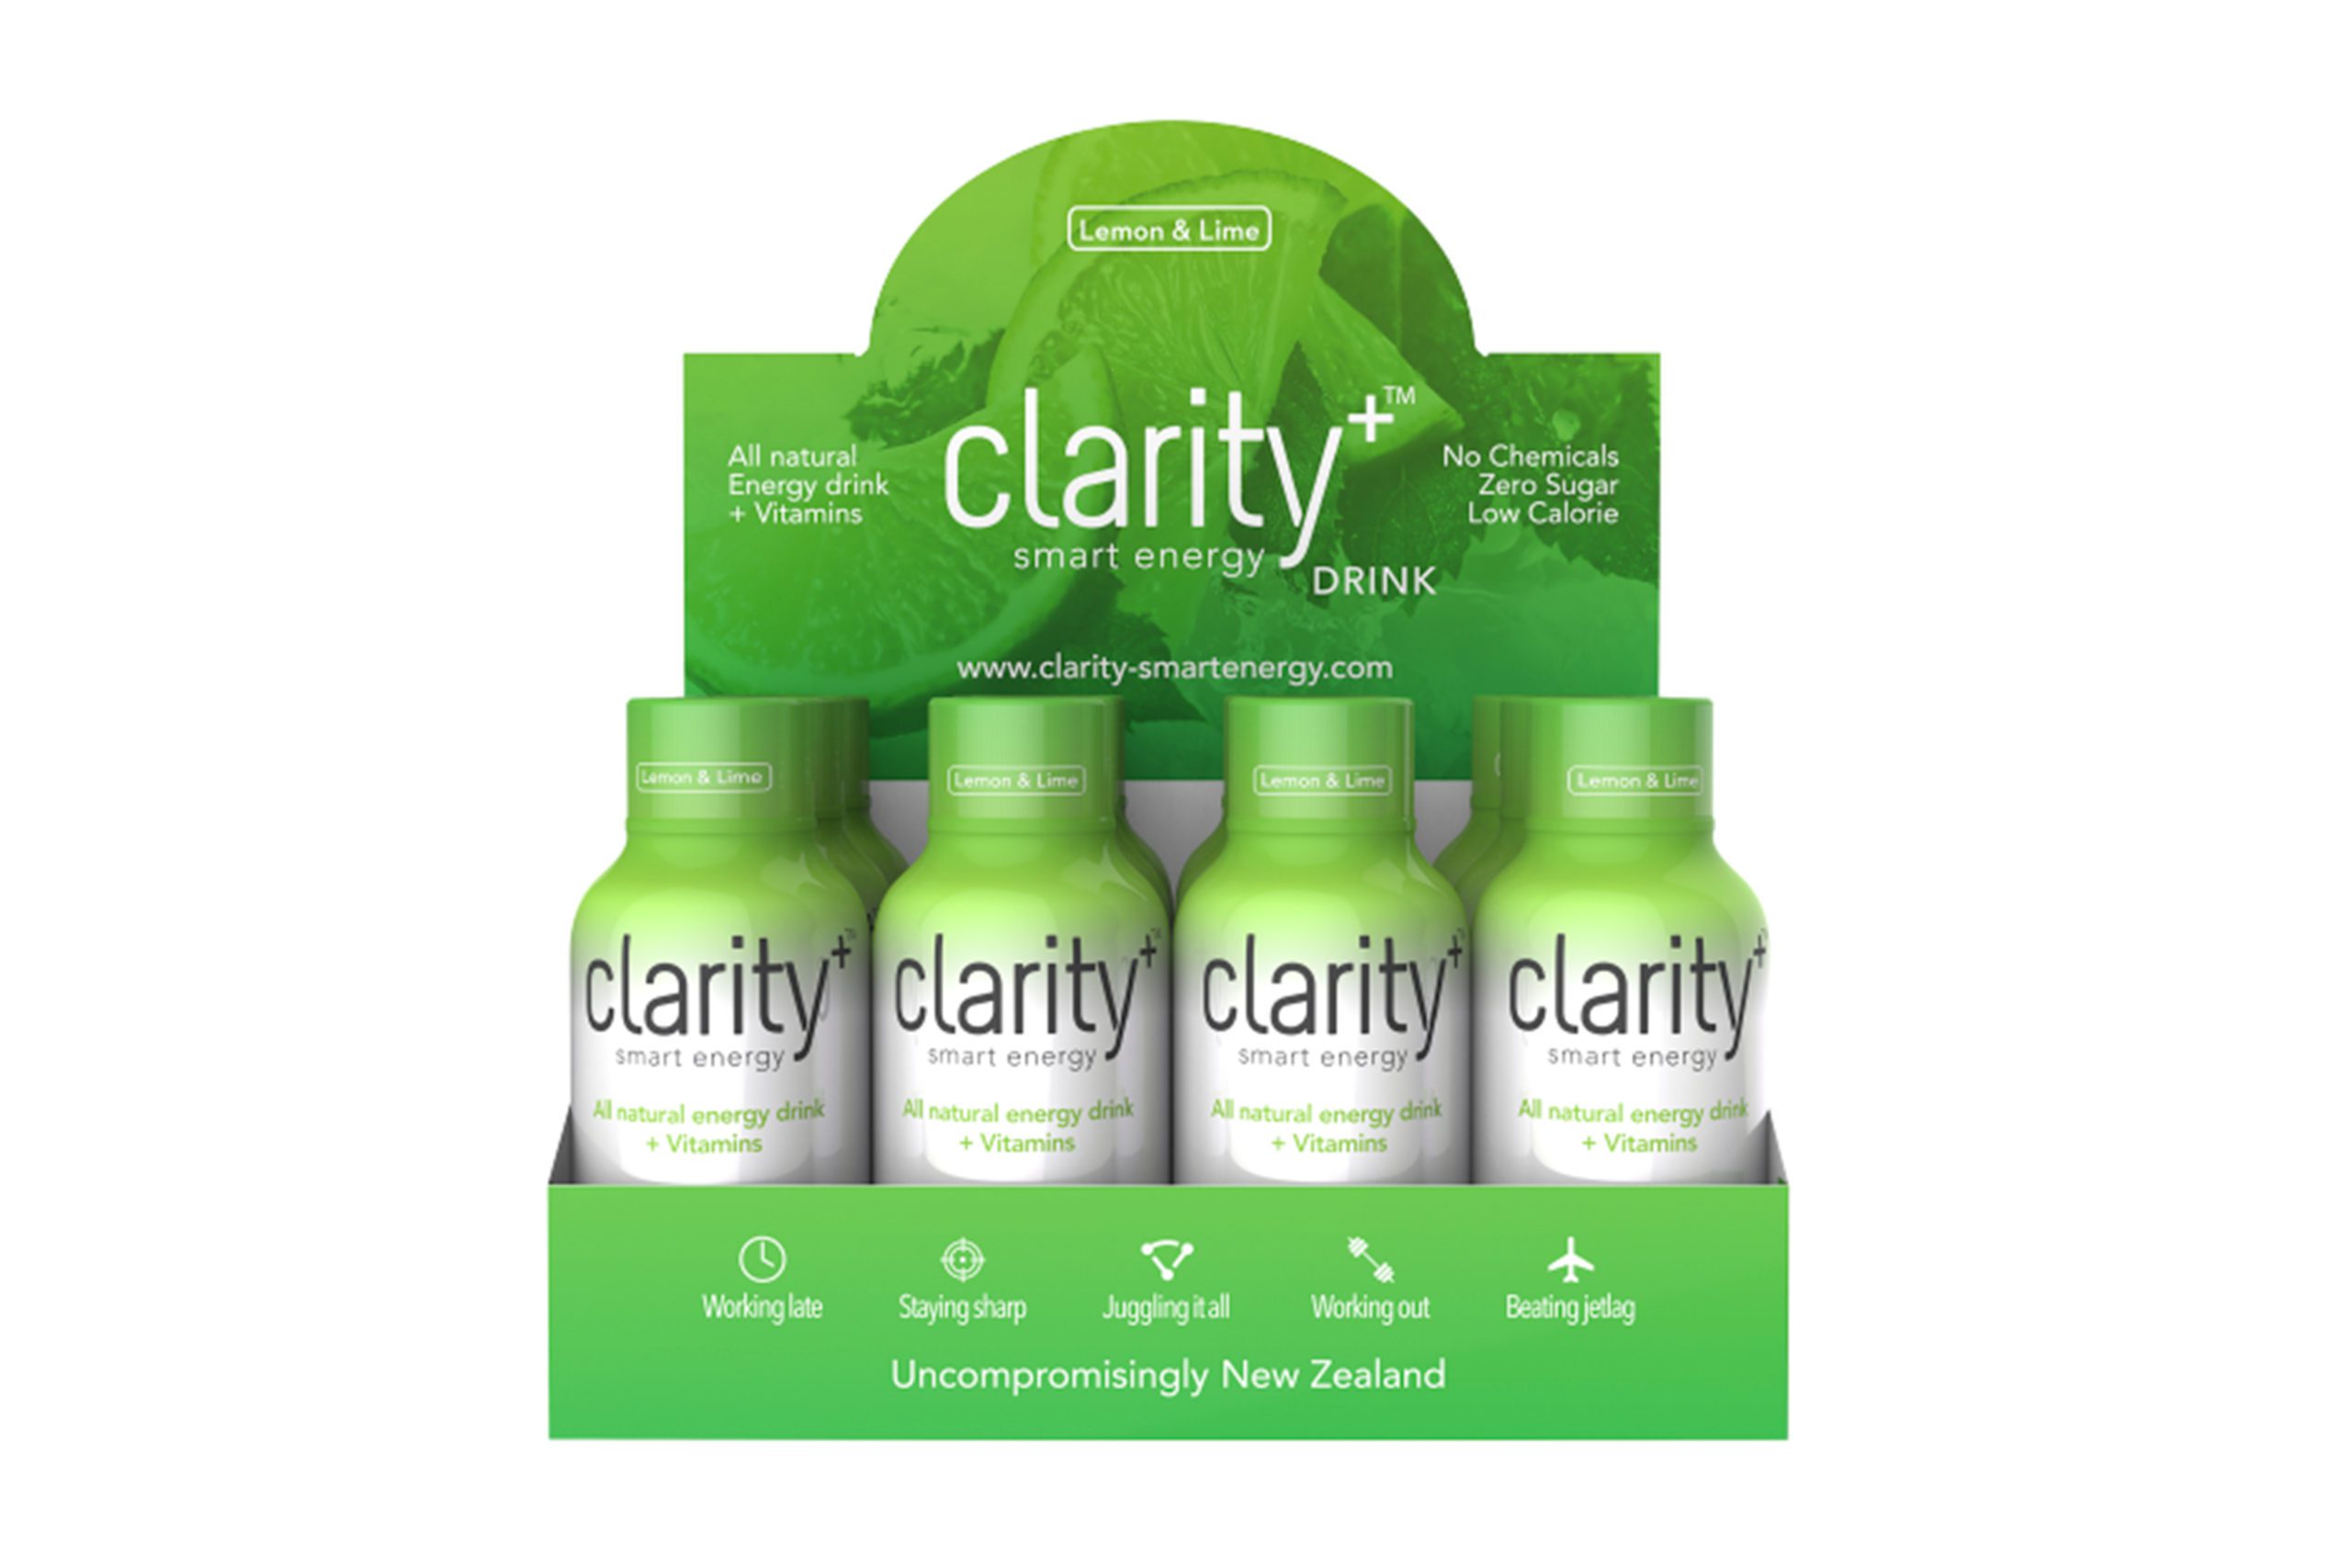 Clarity packaging design by ipulse creative agency in Hong Kong